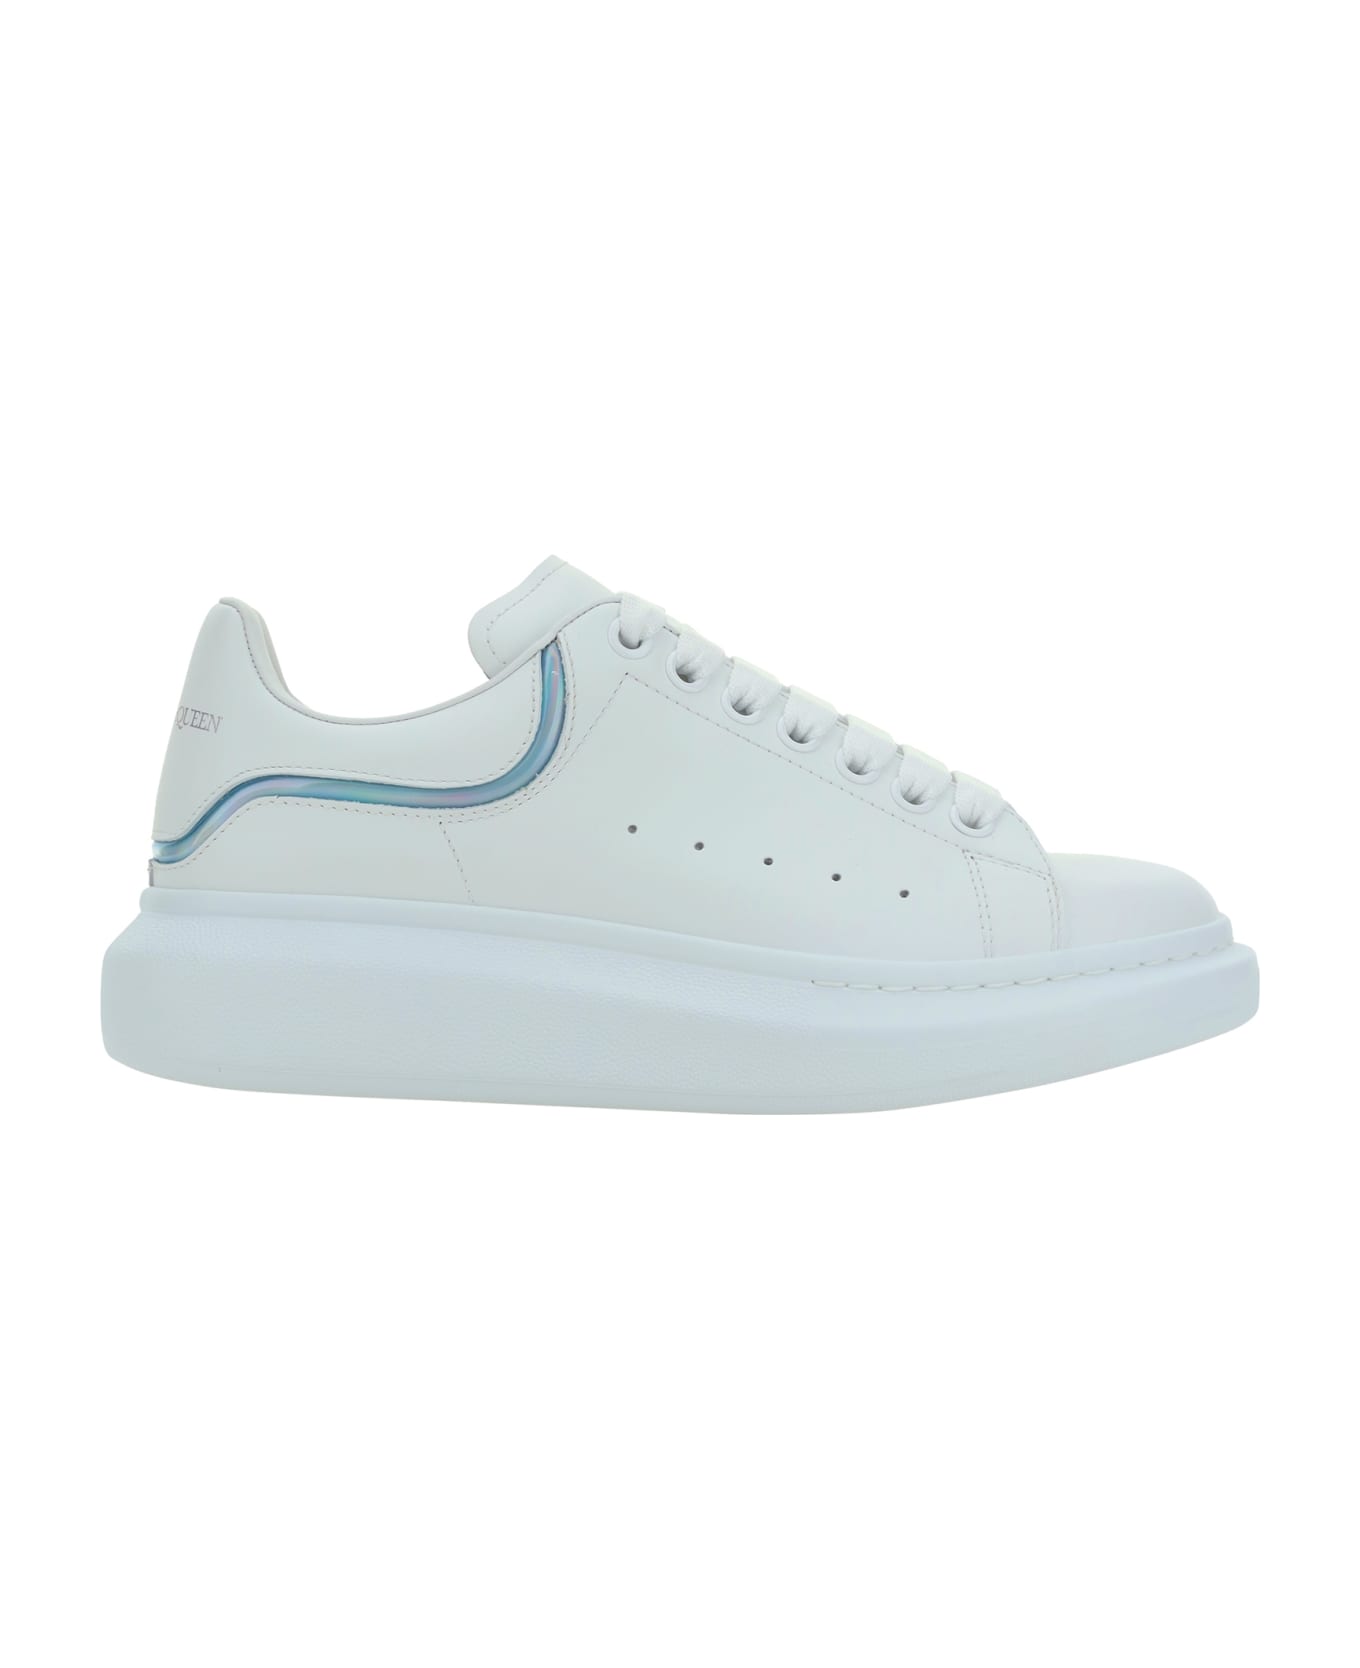 Alexander McQueen Oversize Sneakers - White/paradise Blue